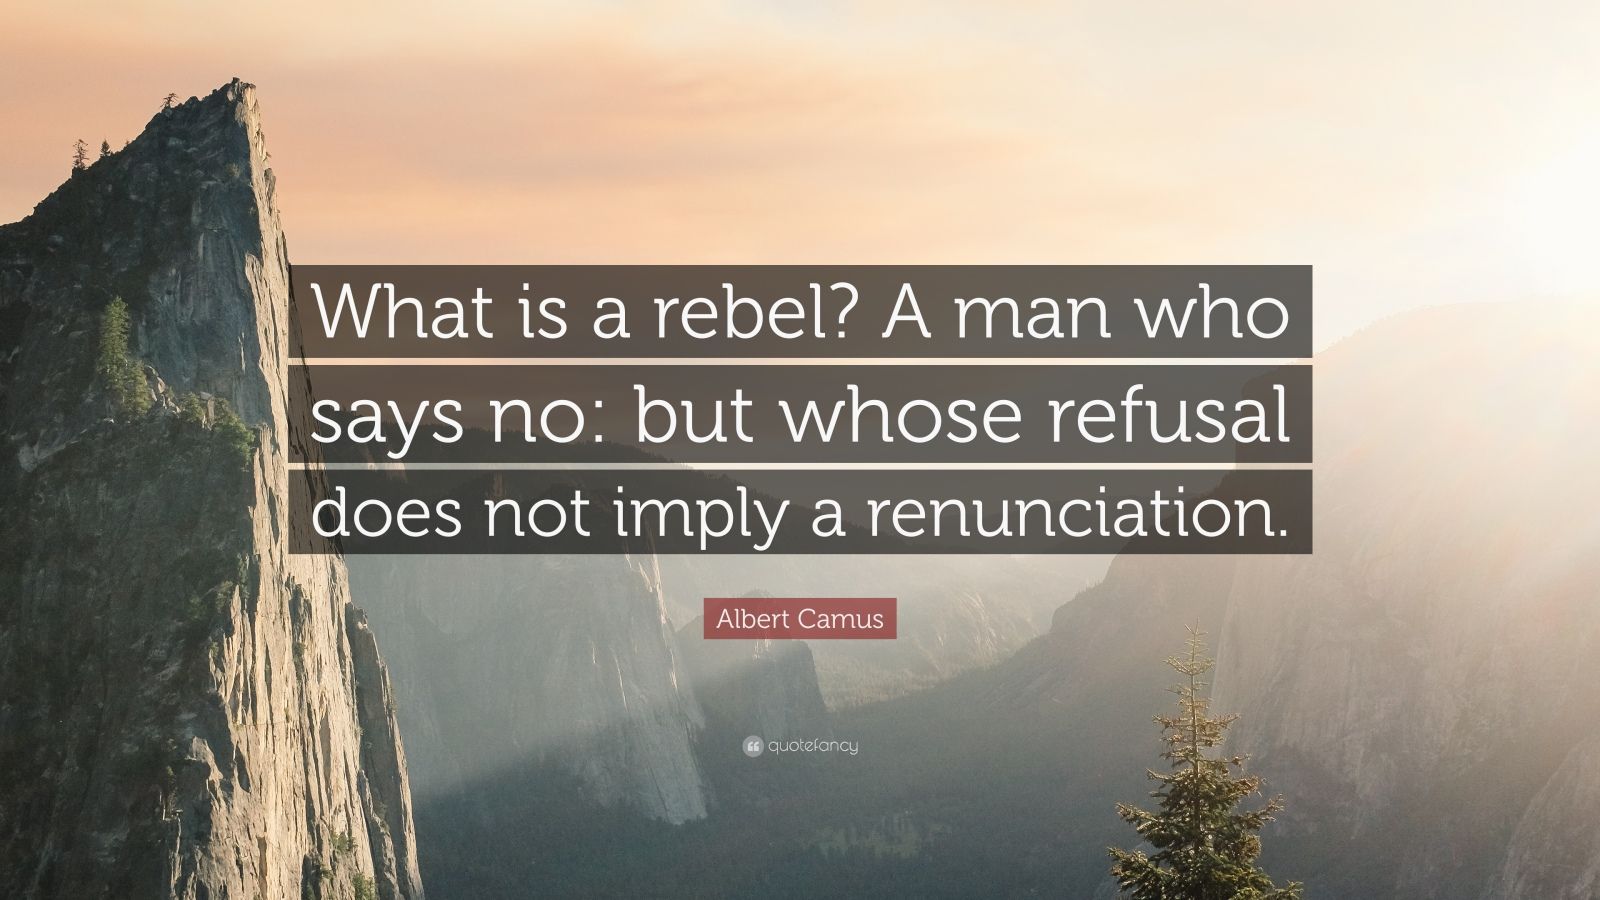 The Rebel by Albert Camus